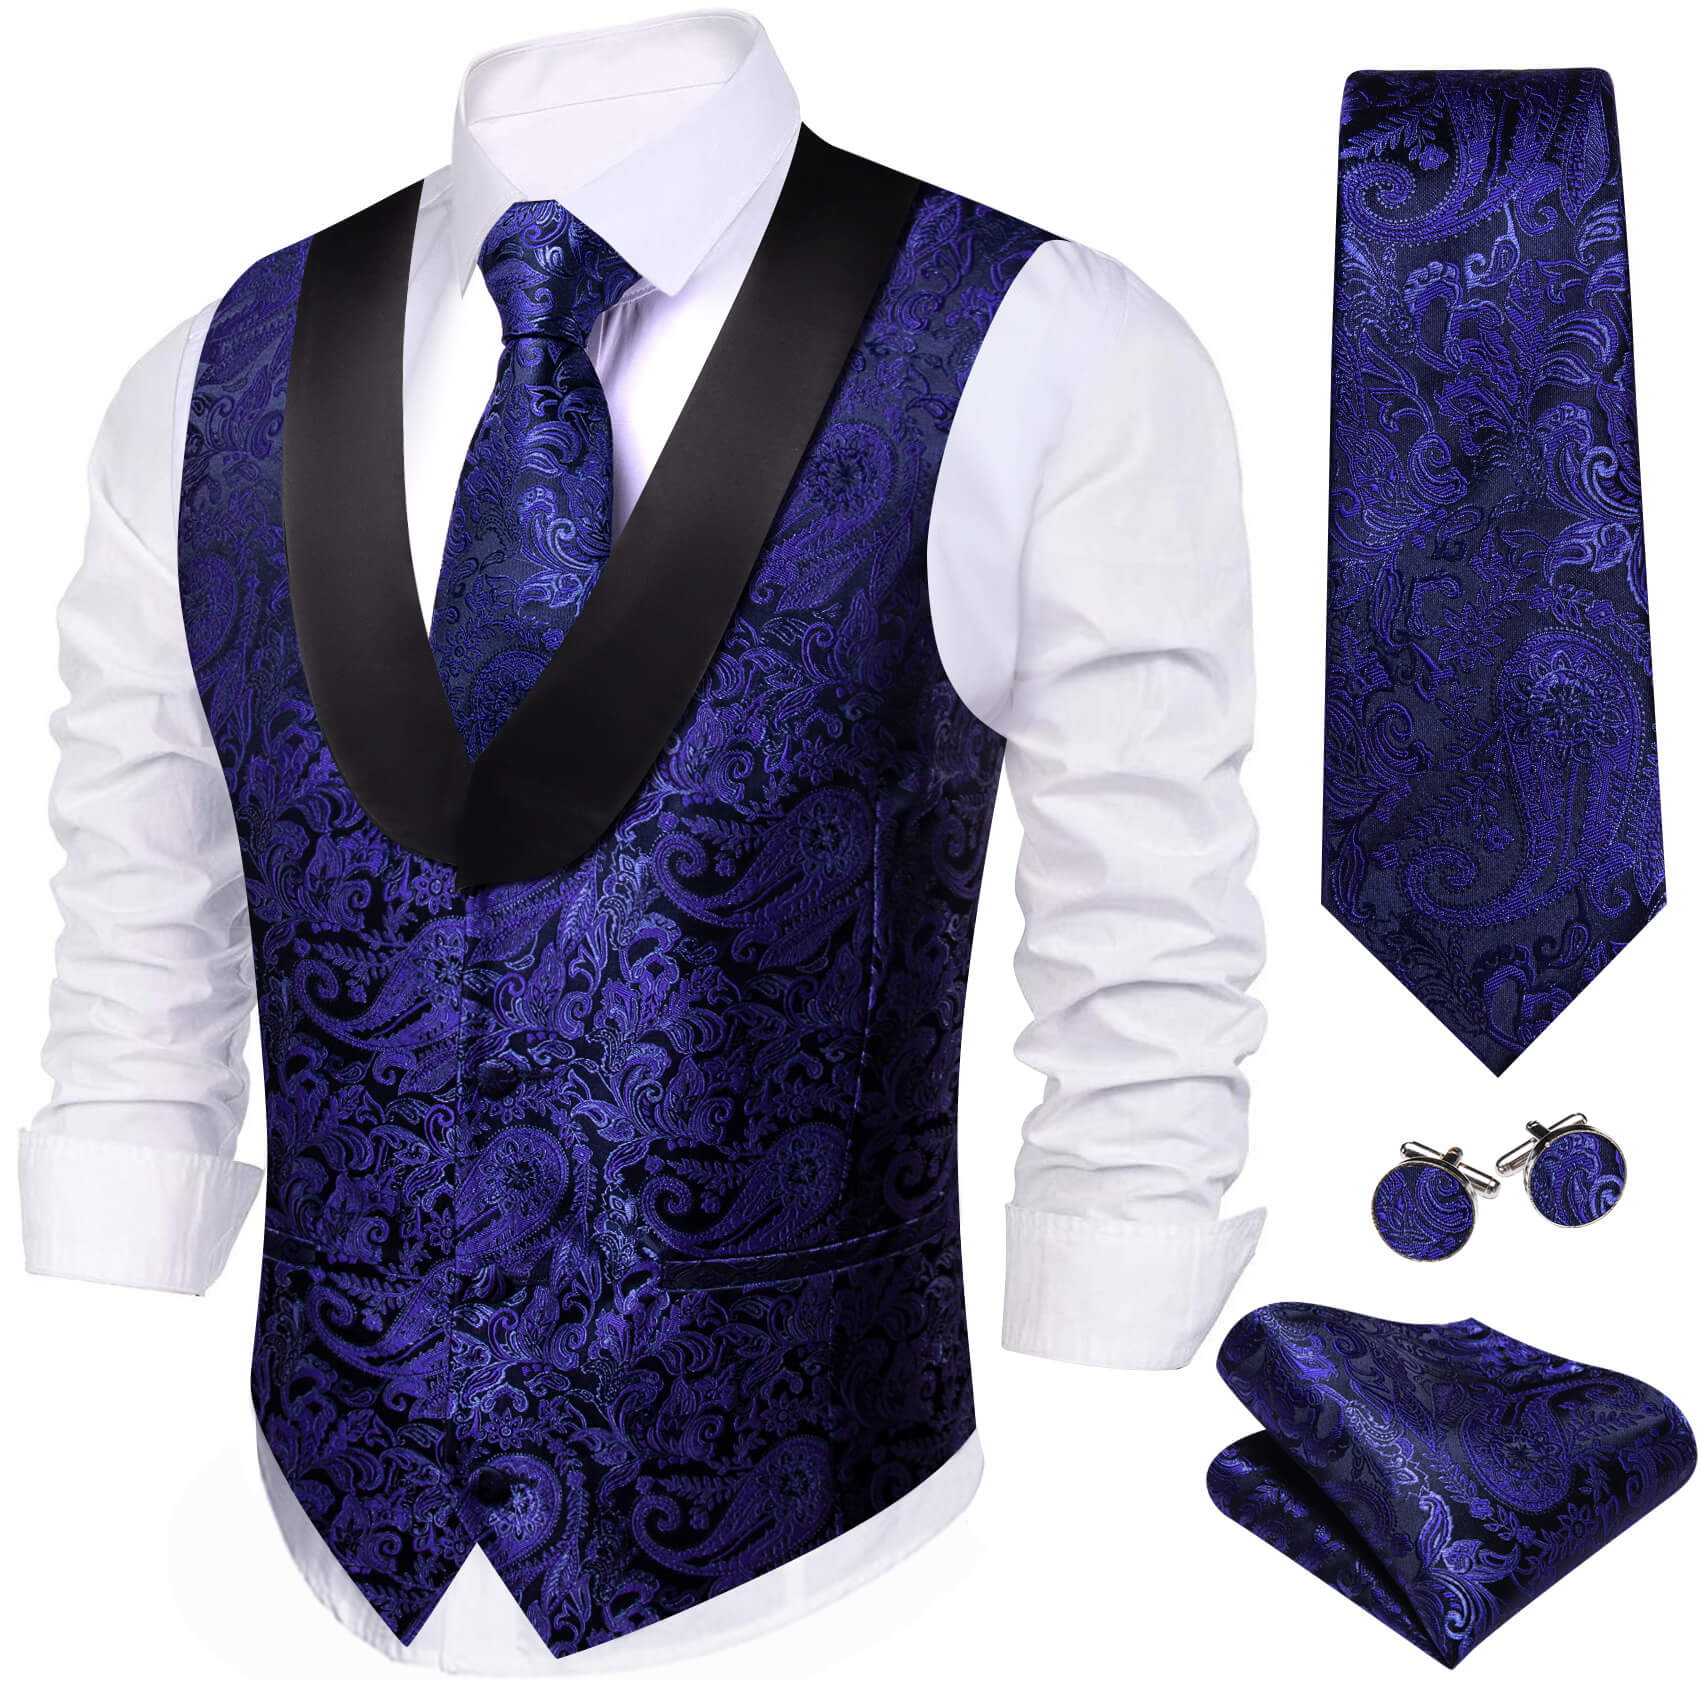 Barry.wang Vest for Men Navy Blue Paisley Shawl Collar Vest Tie Hanky Cufflinks Set